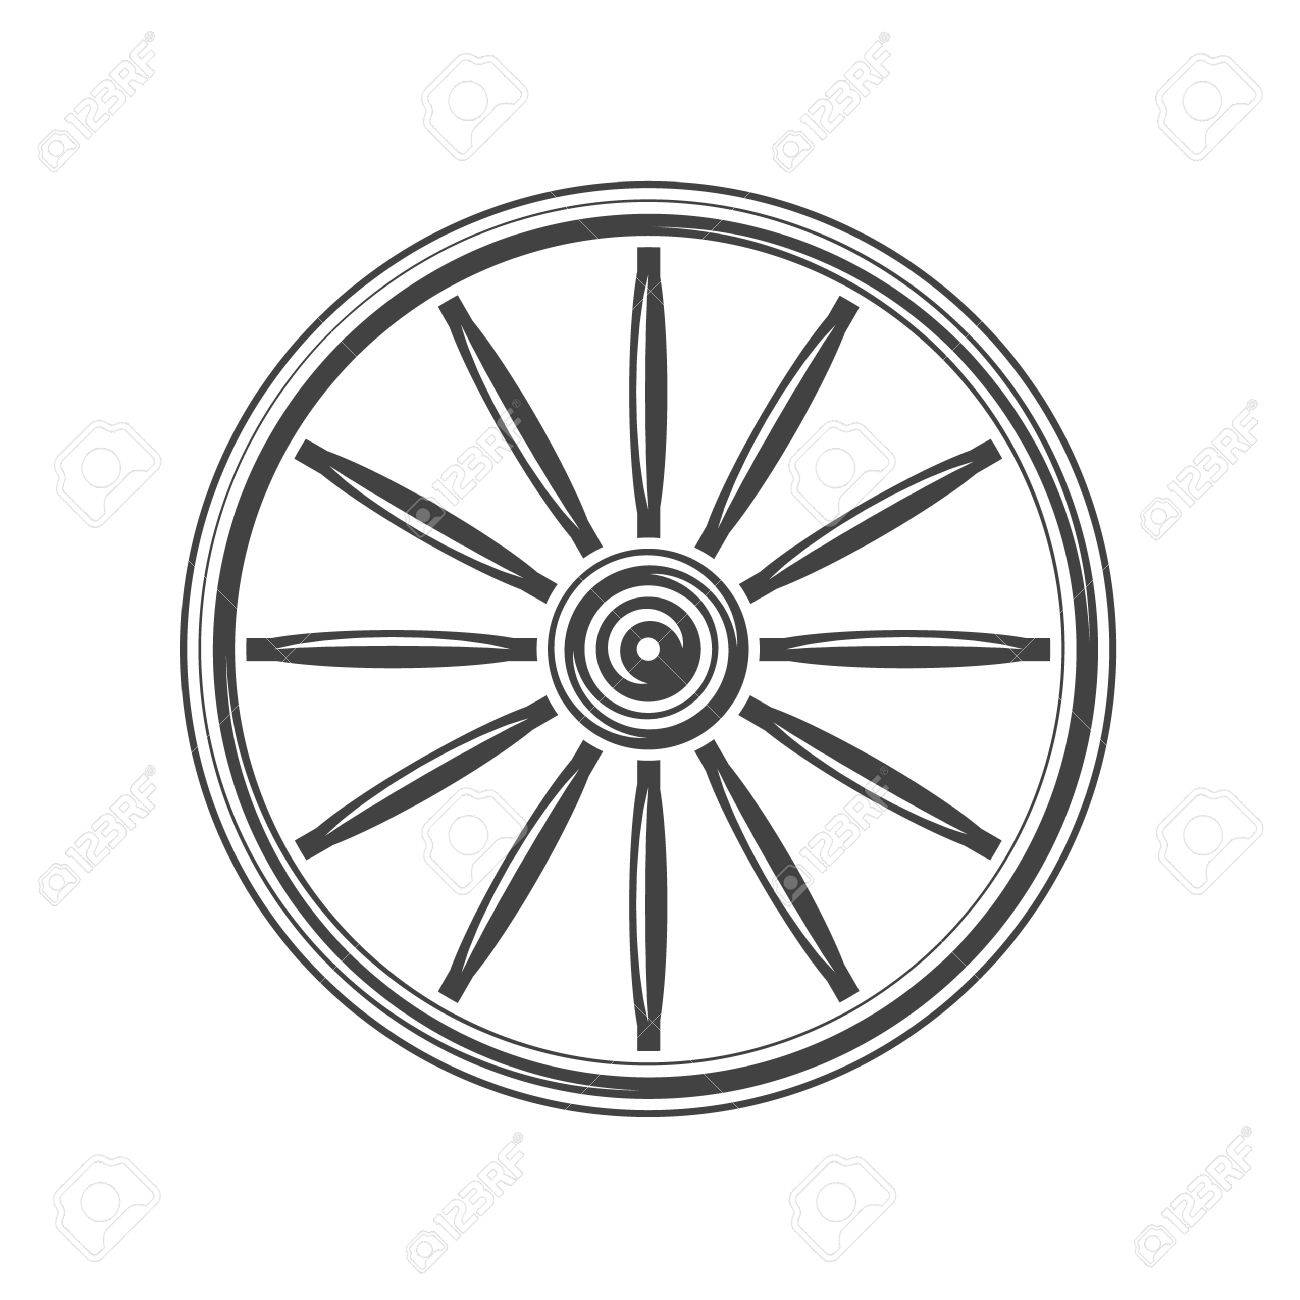 Wheel clipart wild west. Free wagon wheels download